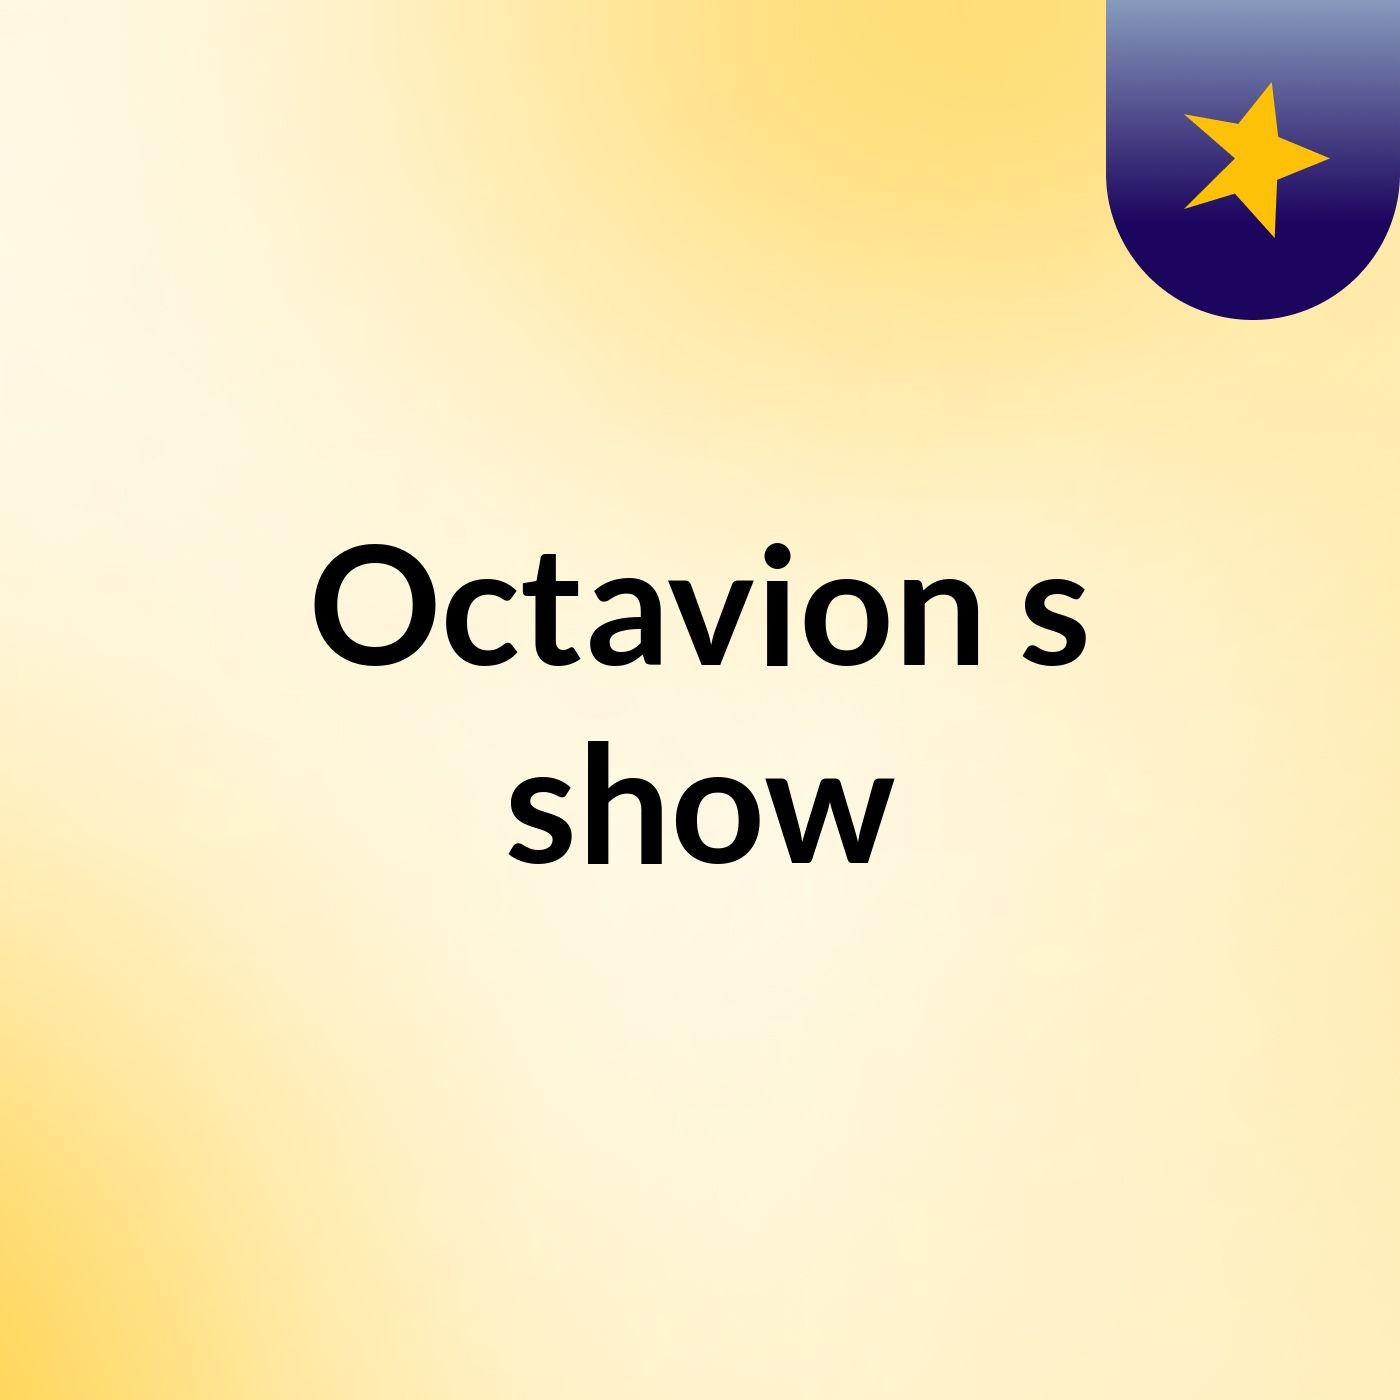 Octavion's show